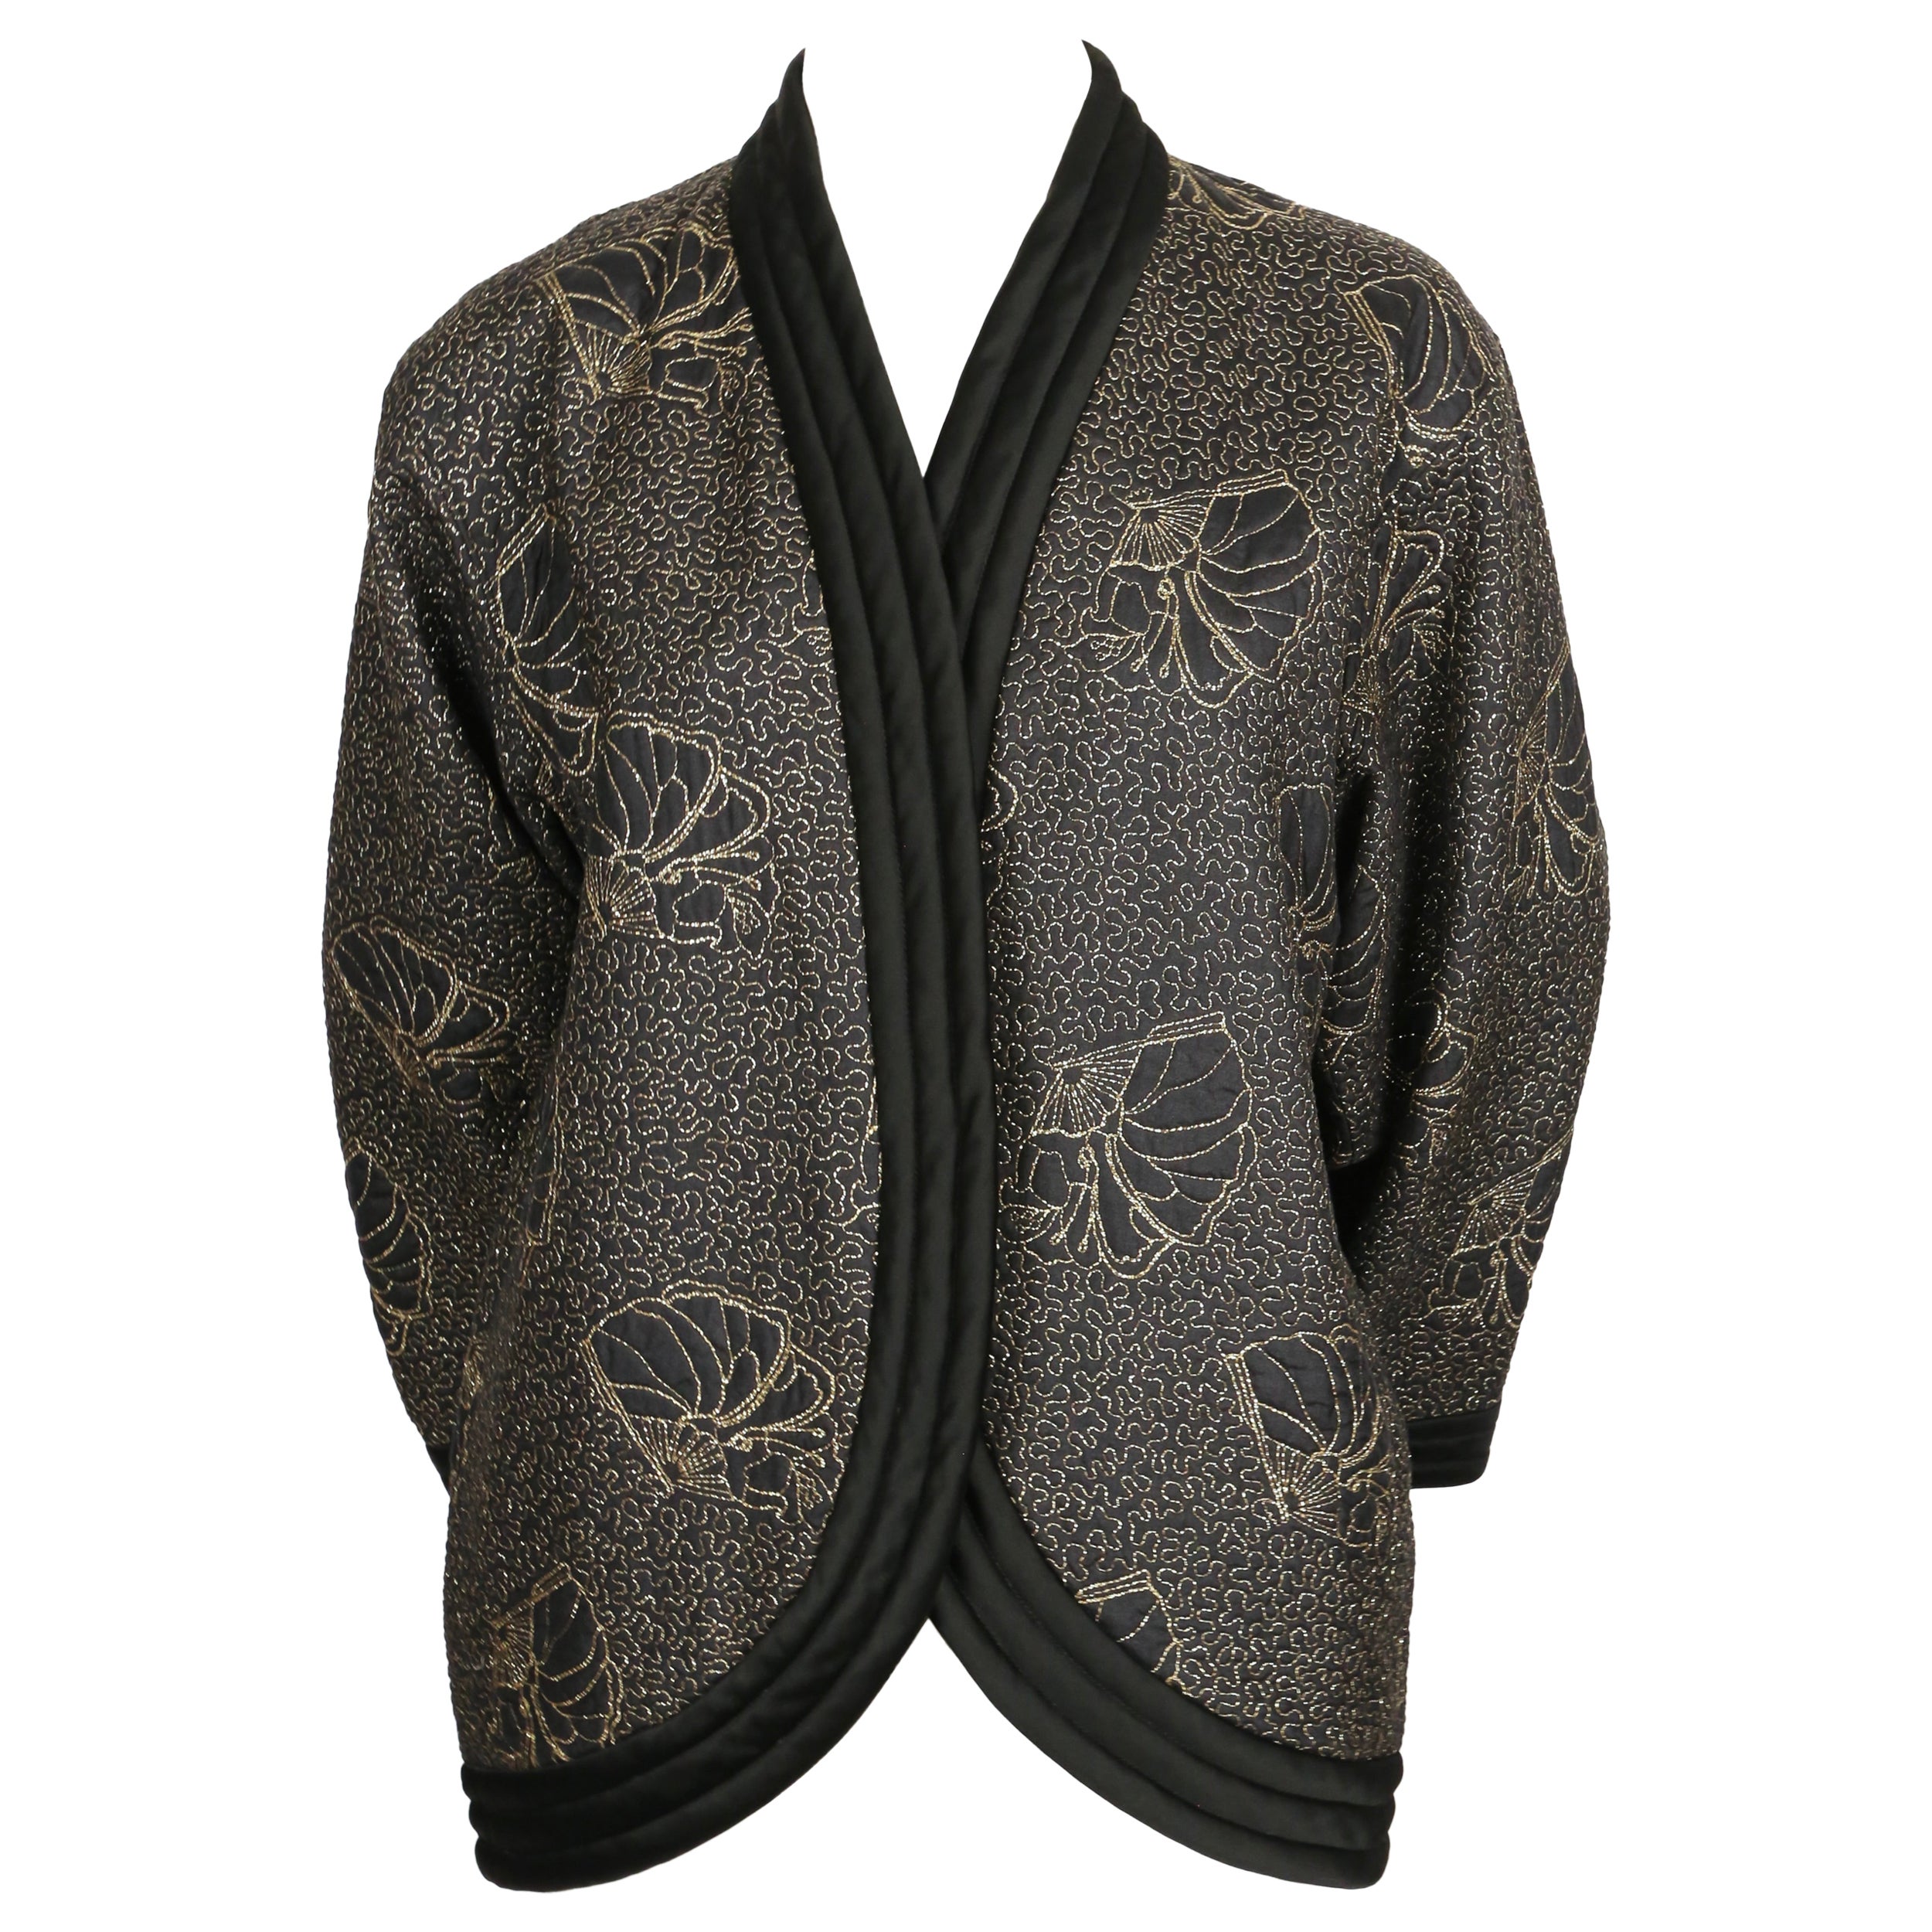 1979 YVES SAINT LAURENT black satin kimono jacket with gold seashell embroidery For Sale